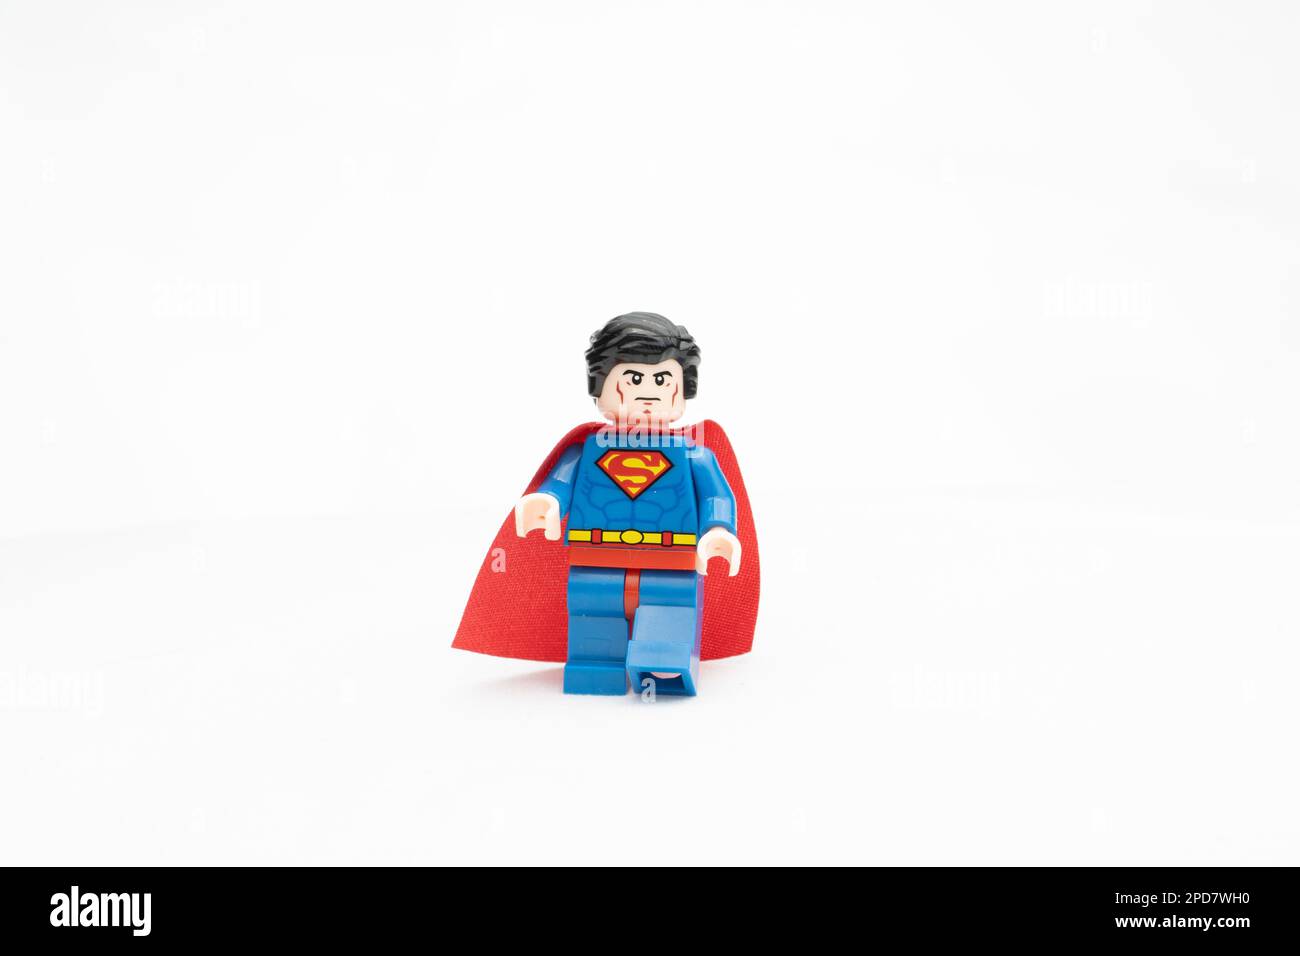 A Lego superhero figurine of Superman standing atop a white background Stock Photo